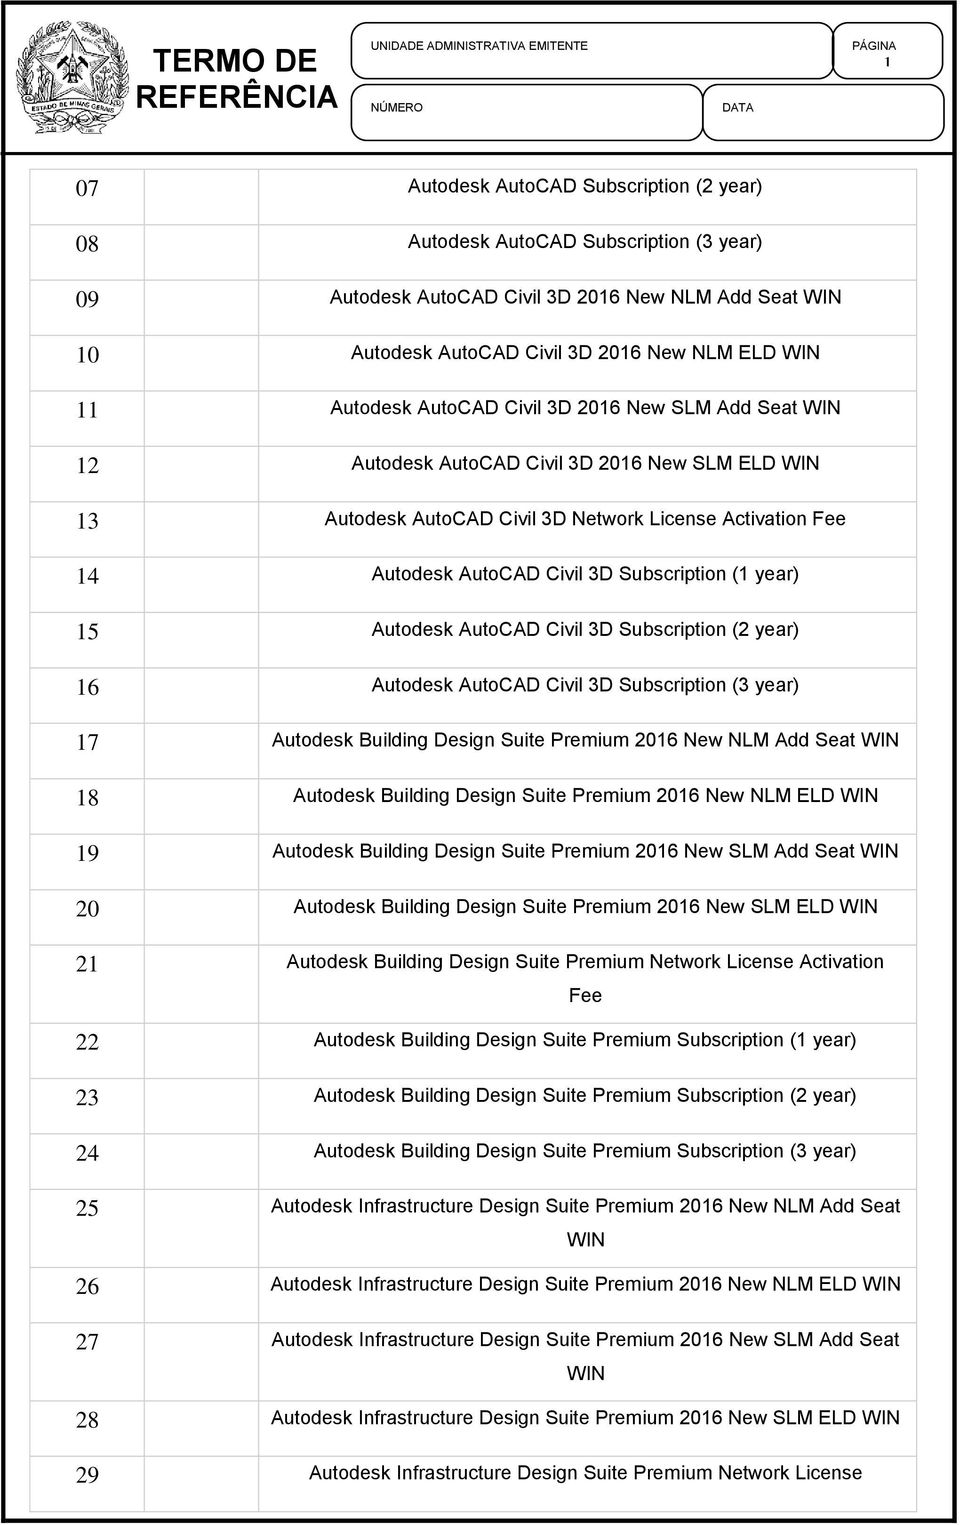 Autodesk AutoCAD Civil 3D Subscription (2 year) 6 Autodesk AutoCAD Civil 3D Subscription (3 year) 7 Autodesk Building Design Suite Premium 206 New NLM Add Seat WIN 8 Autodesk Building Design Suite